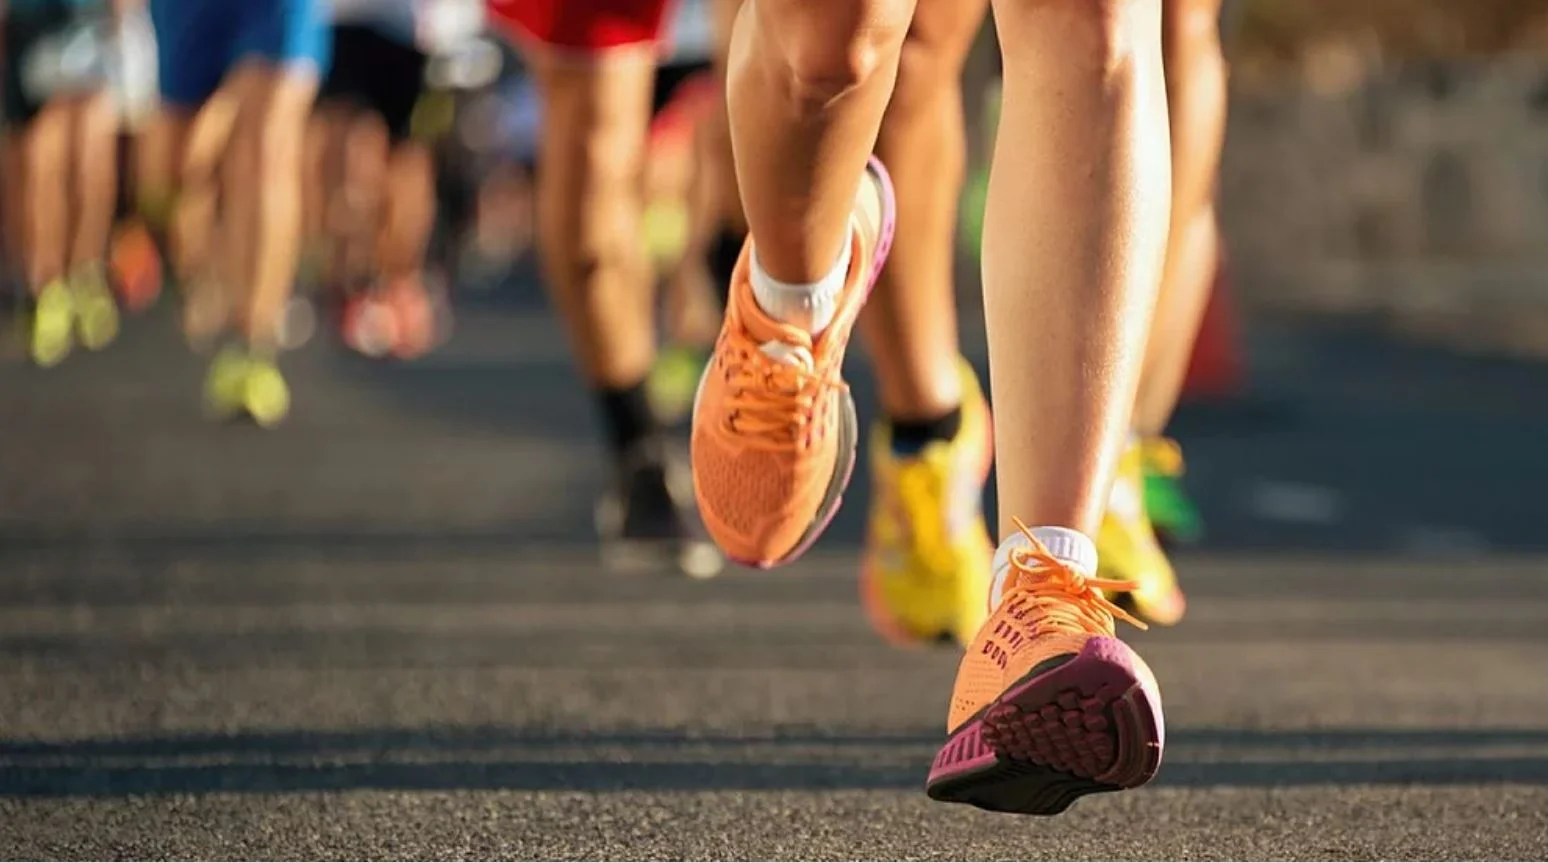 Ultramaratona de 60 quilômetros será realizada em Guanambi neste domingo